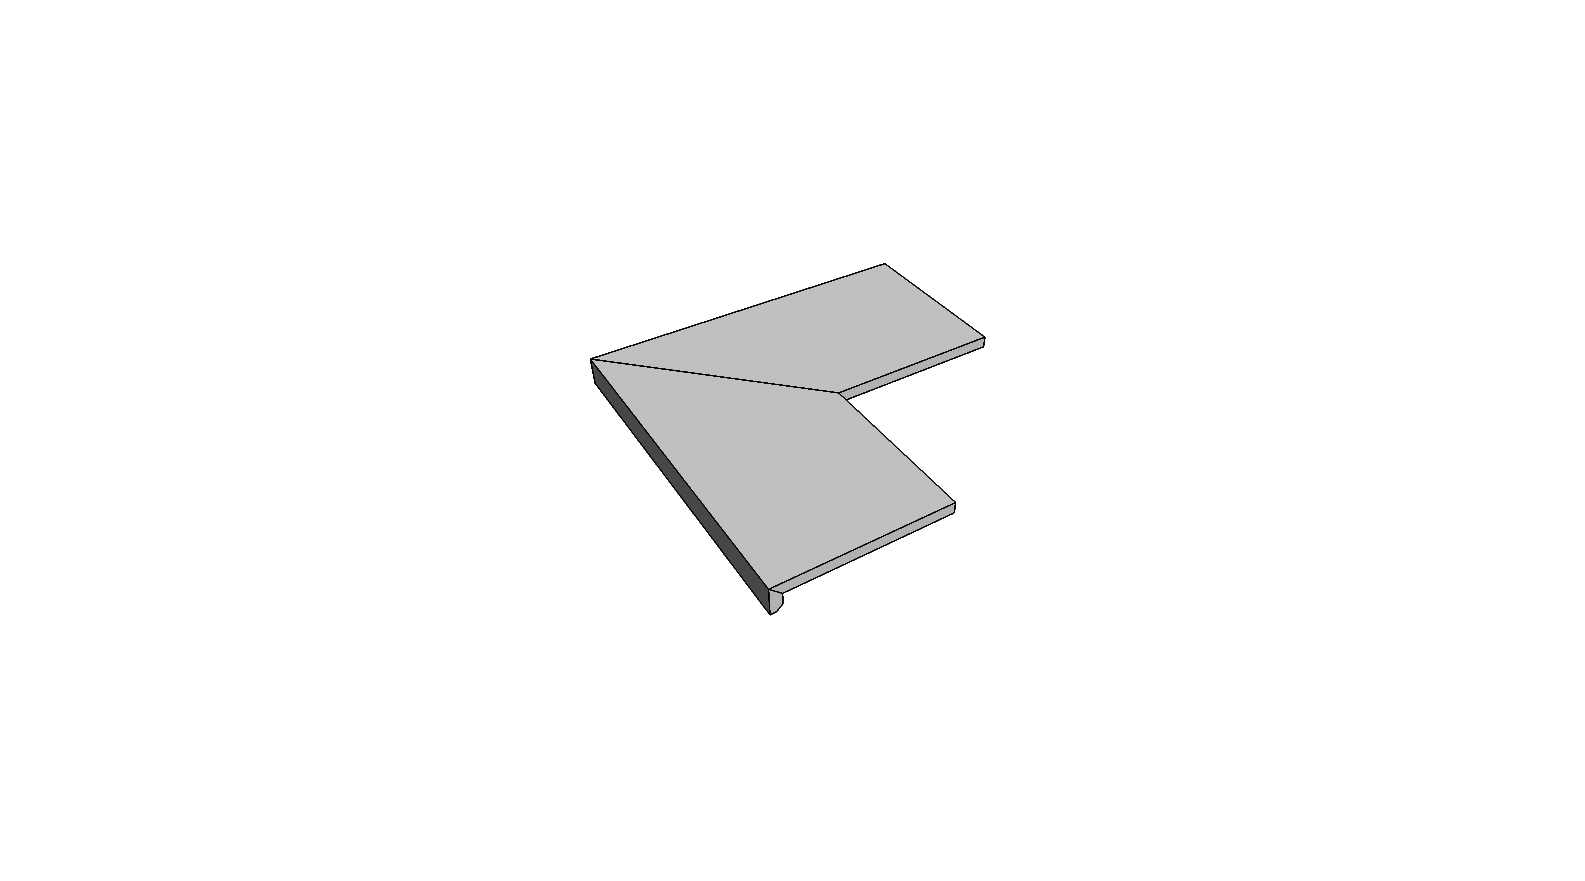 Margelle bord rectiligne angle curviligne <span style="white-space:nowrap;">60x60 cm</span>   <span style="white-space:nowrap;">ép. 20mm</span>